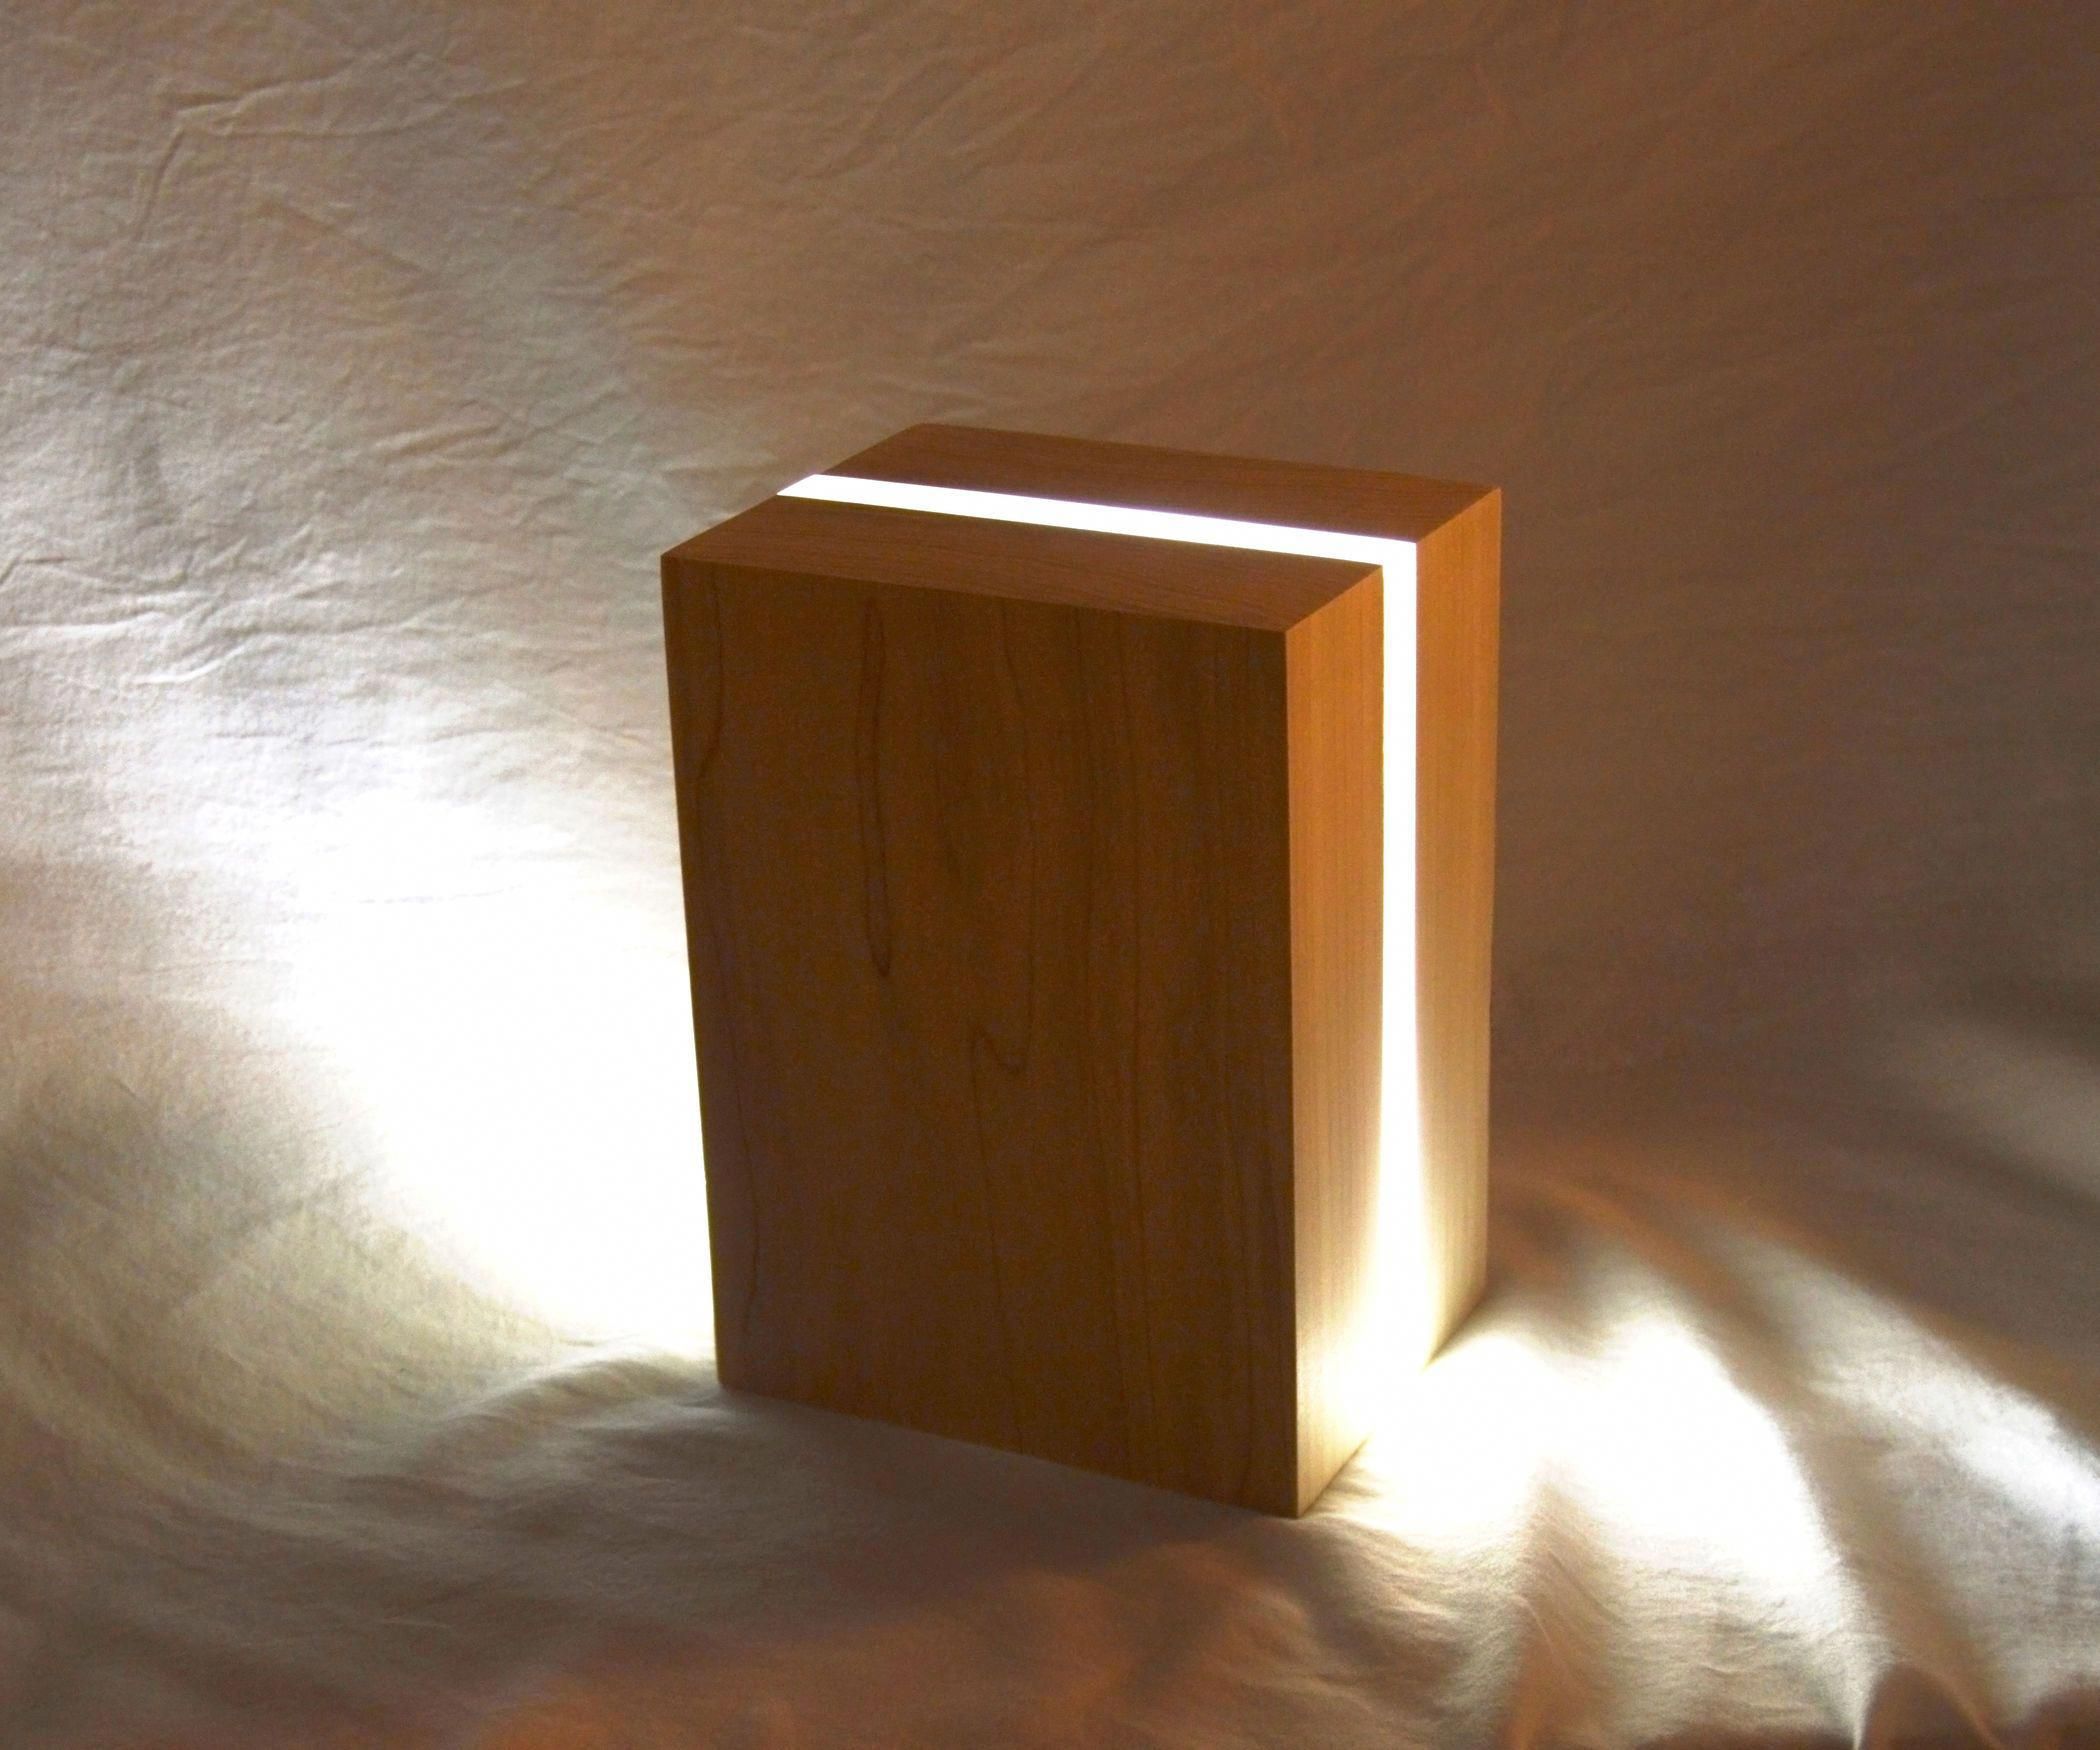 Modern Bedside Lamp From Scraps - Modern Bedside Lamp From Scraps -   19 diy Lamp bedside ideas